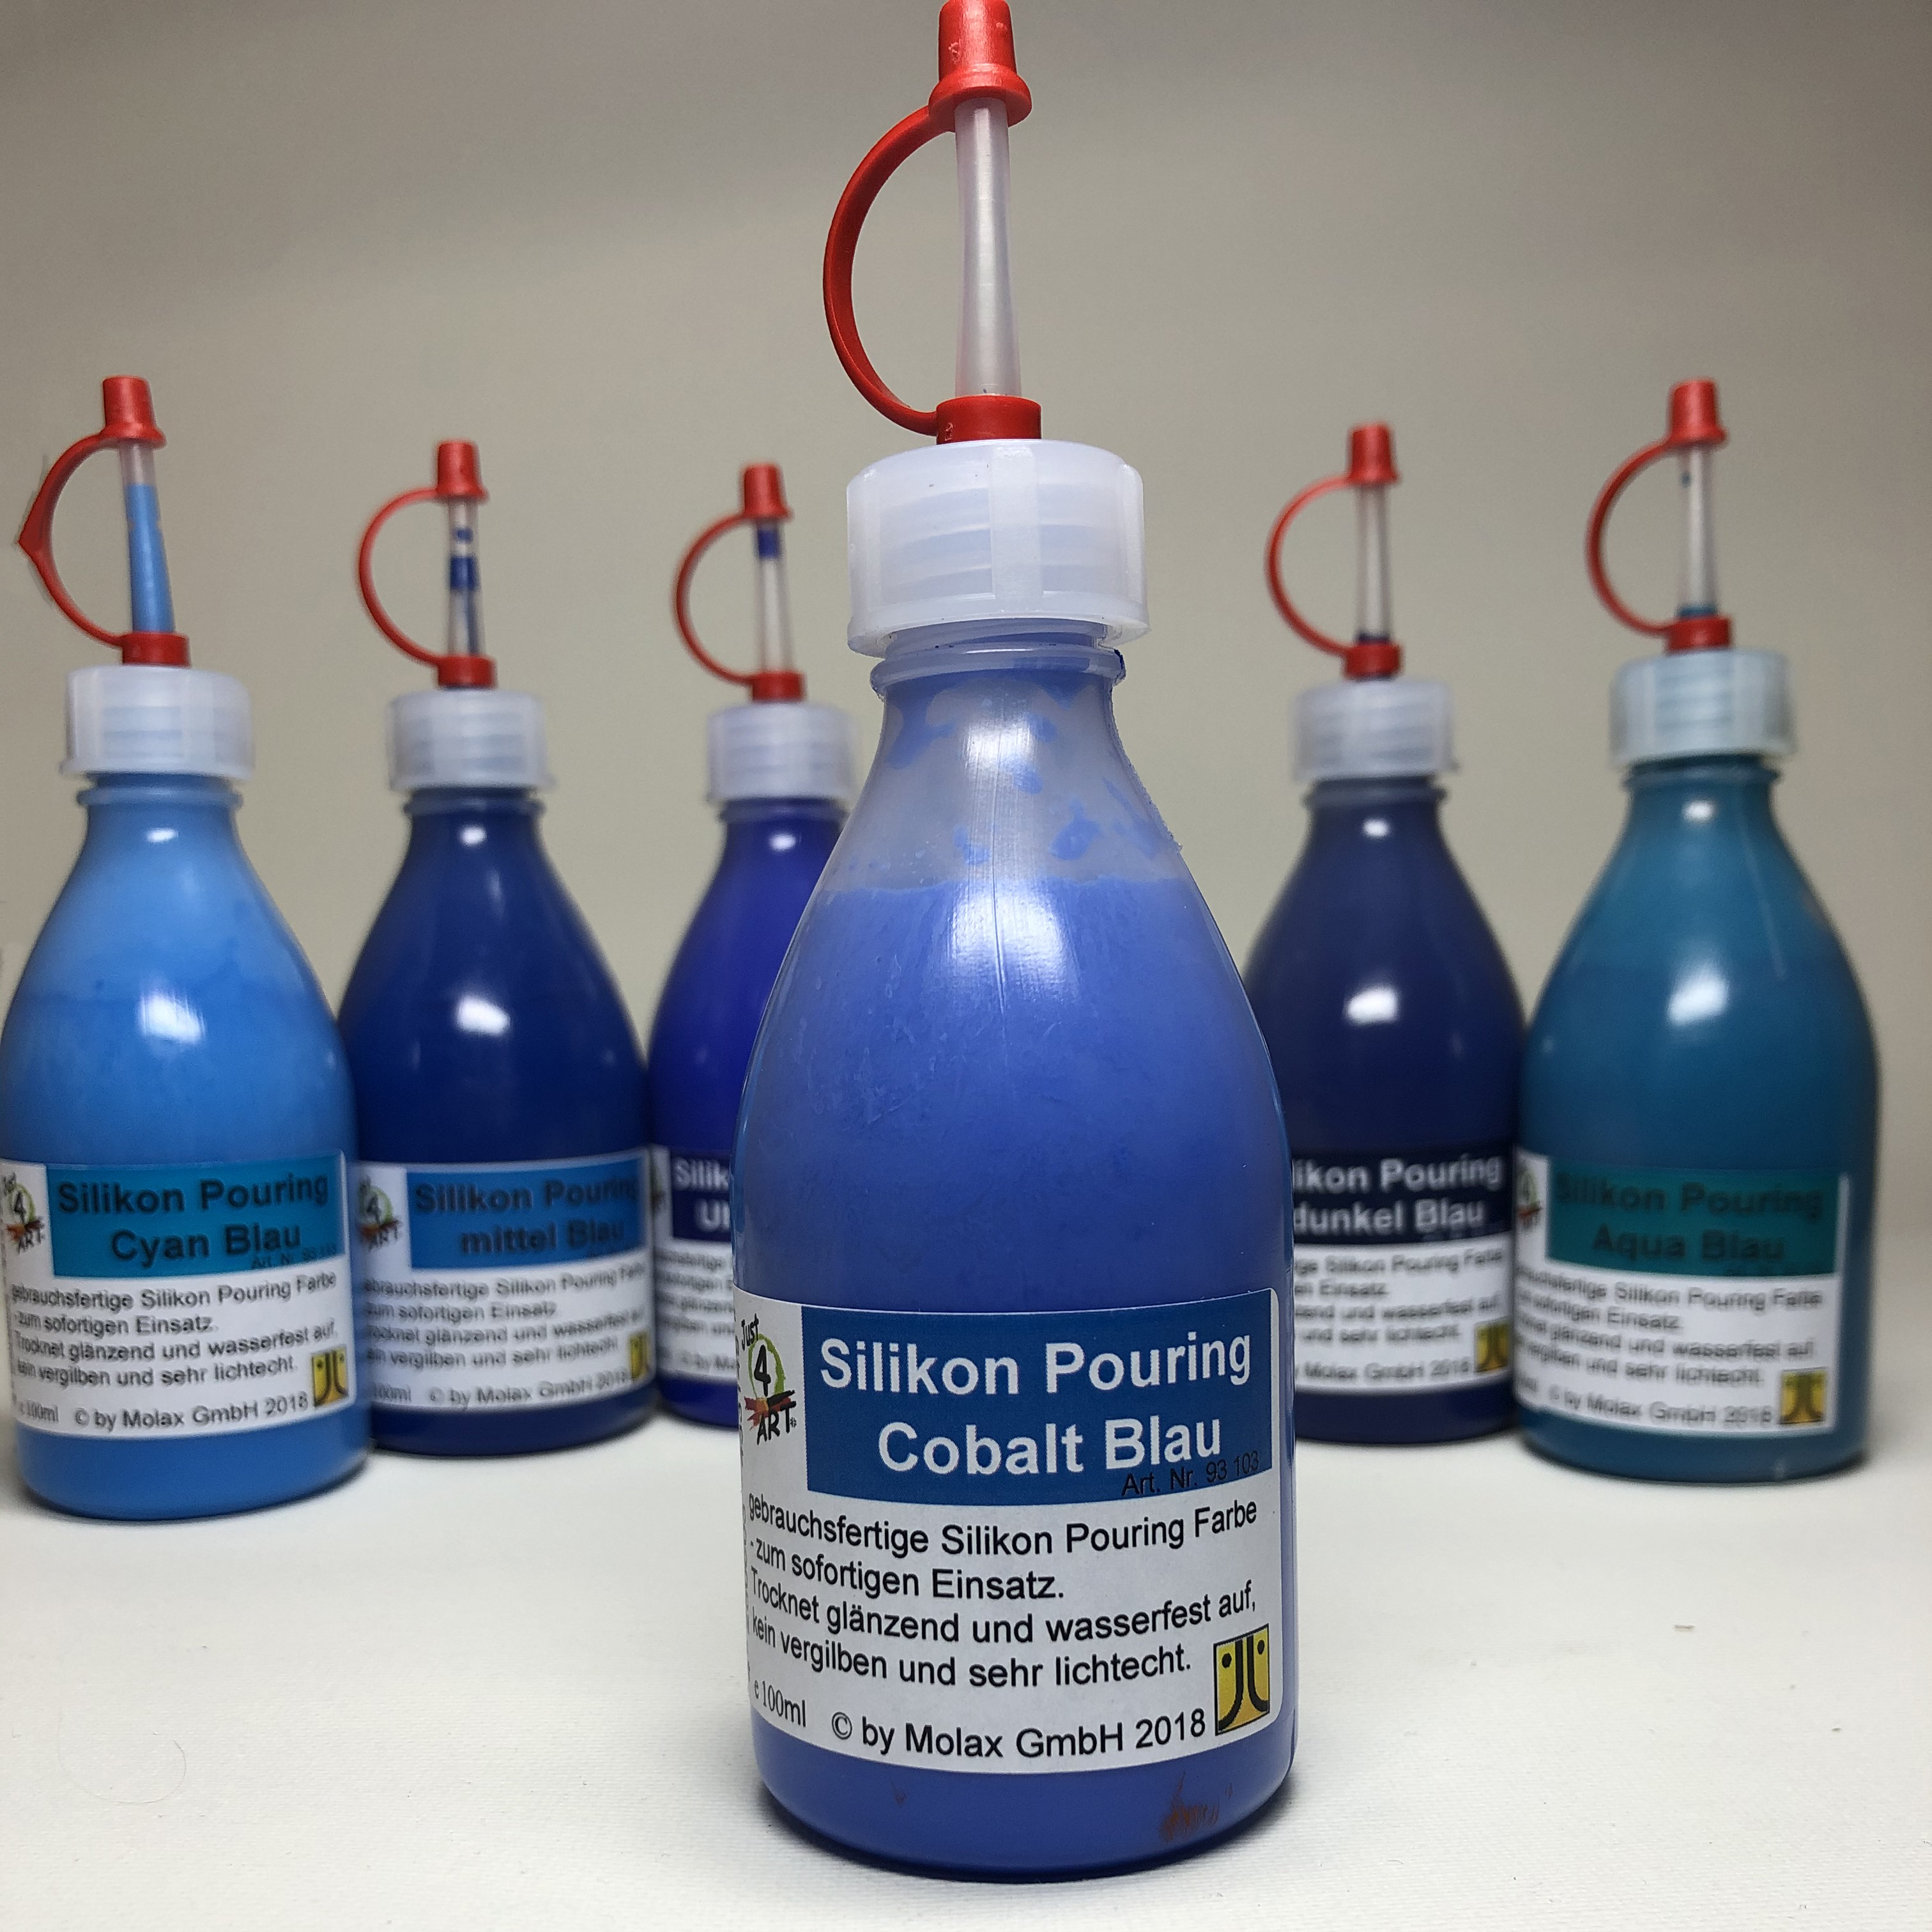 Silicon Pouring 100ml Cobalt Blau